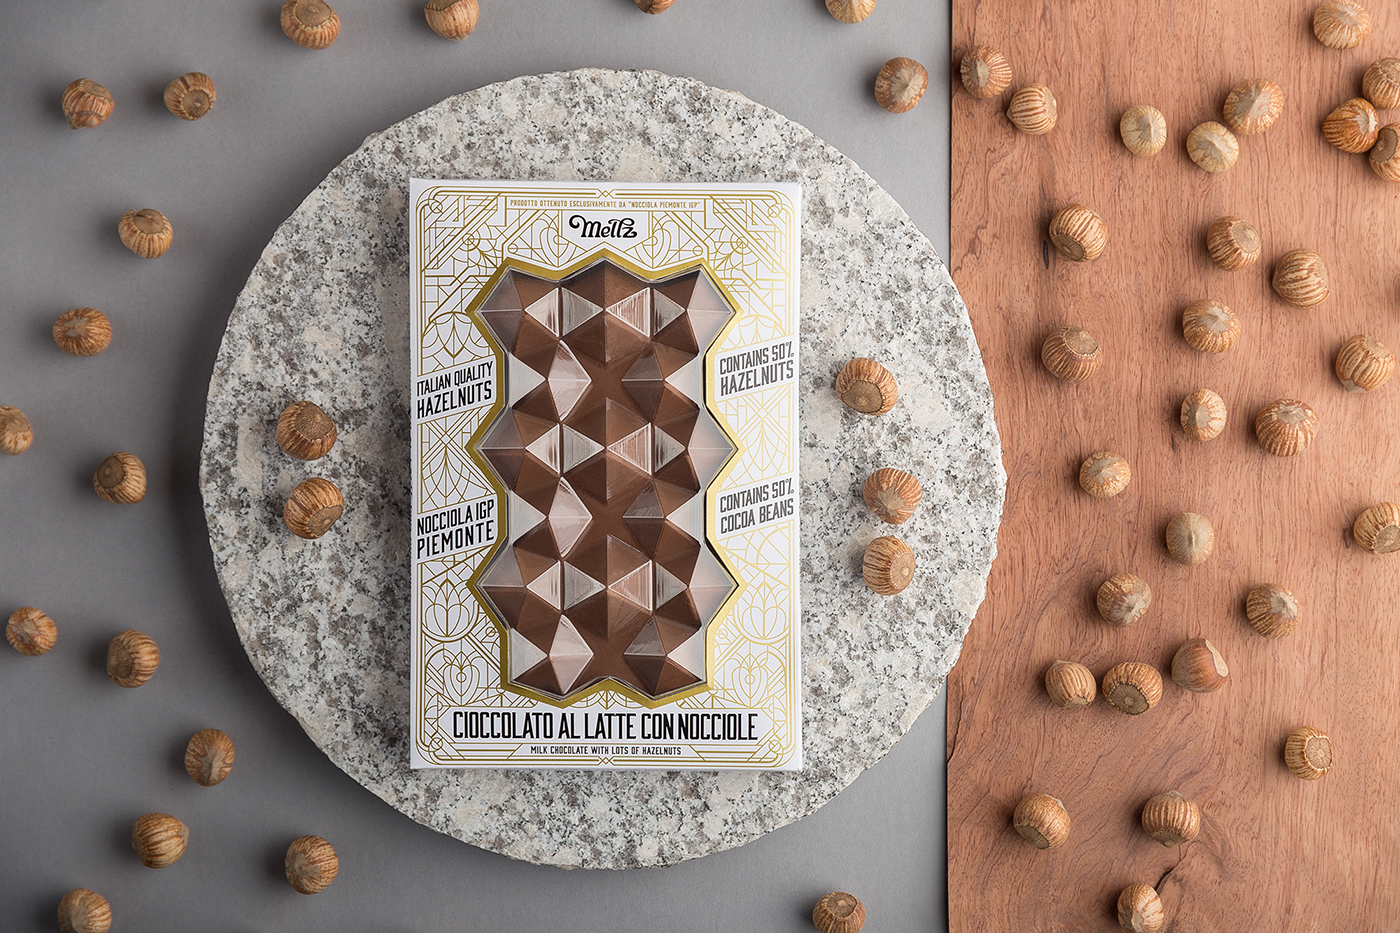 chocolate hotstamping foxtrot Meltz hazelnuts chytry Packaging Italy poland piedmont